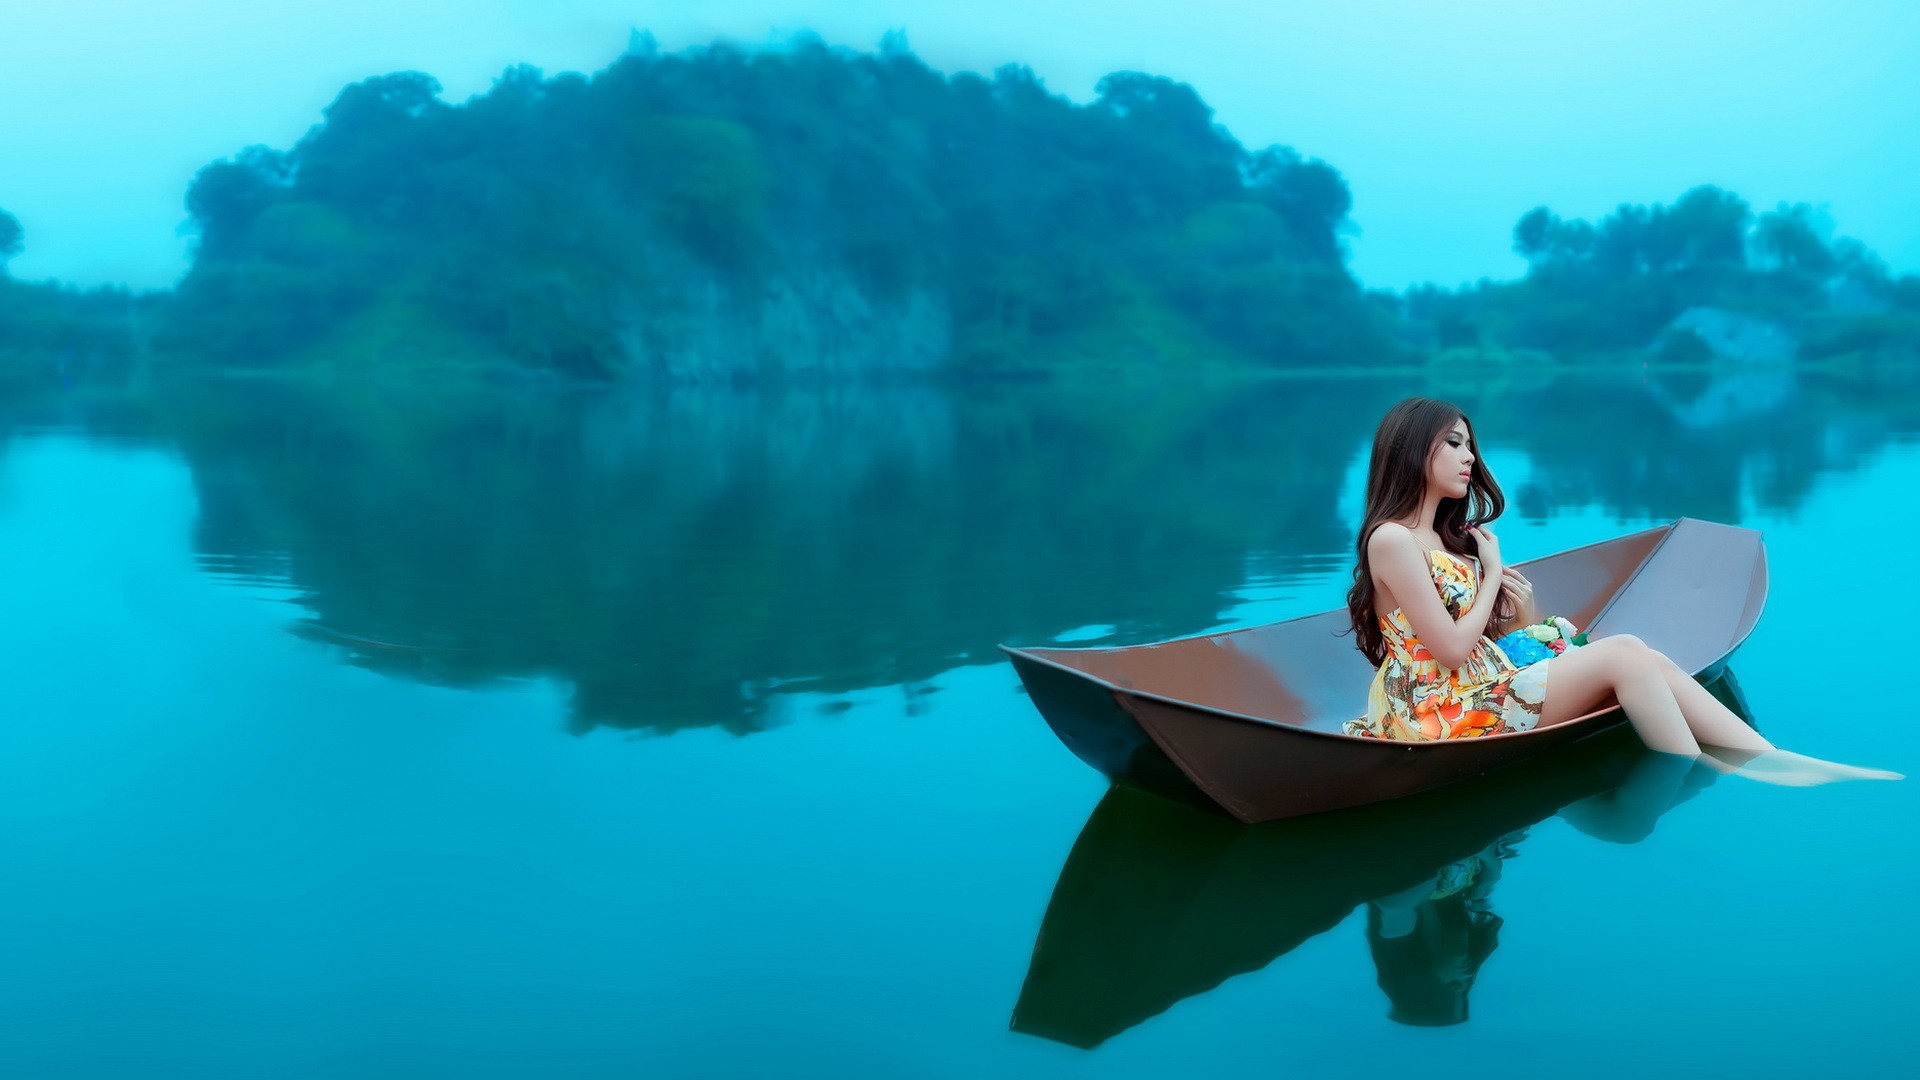 People 1920x1080 boat water women island brunette turquoise lake cyan women outdoors long hair calm dress vehicle model